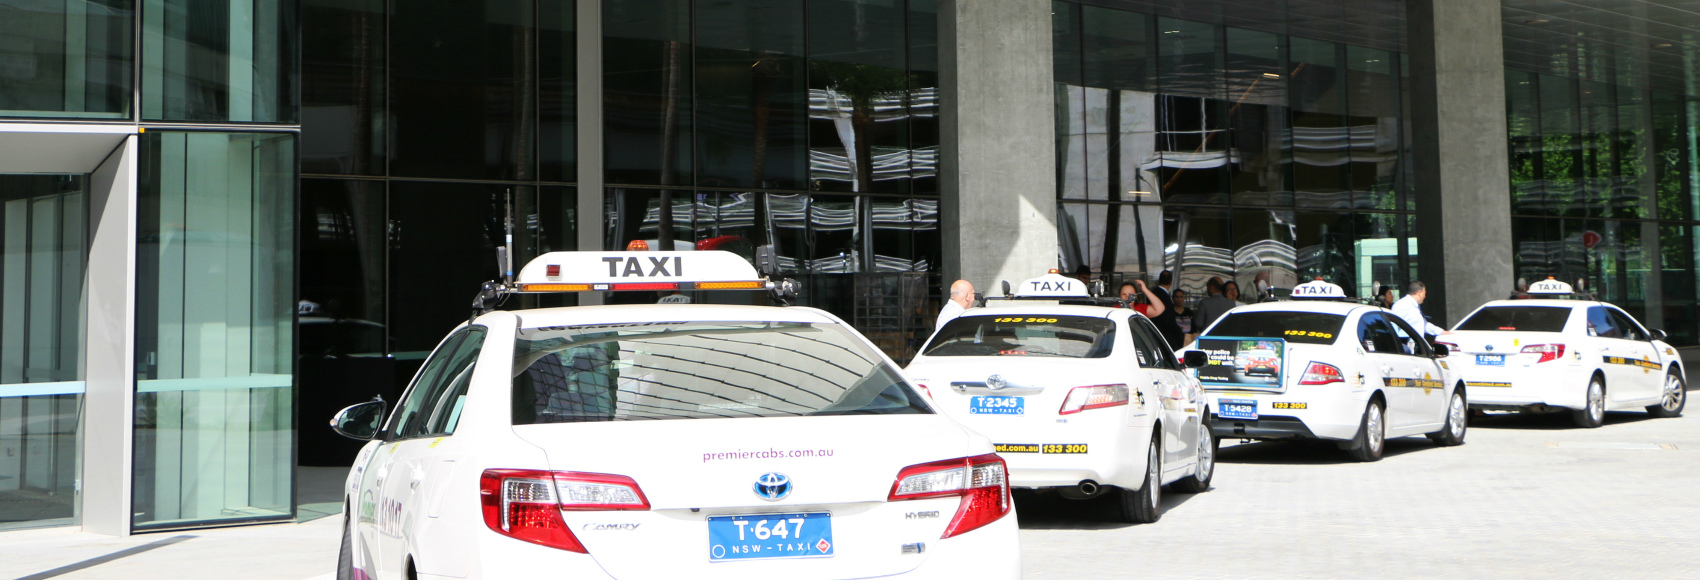 Taxi-Day-Header